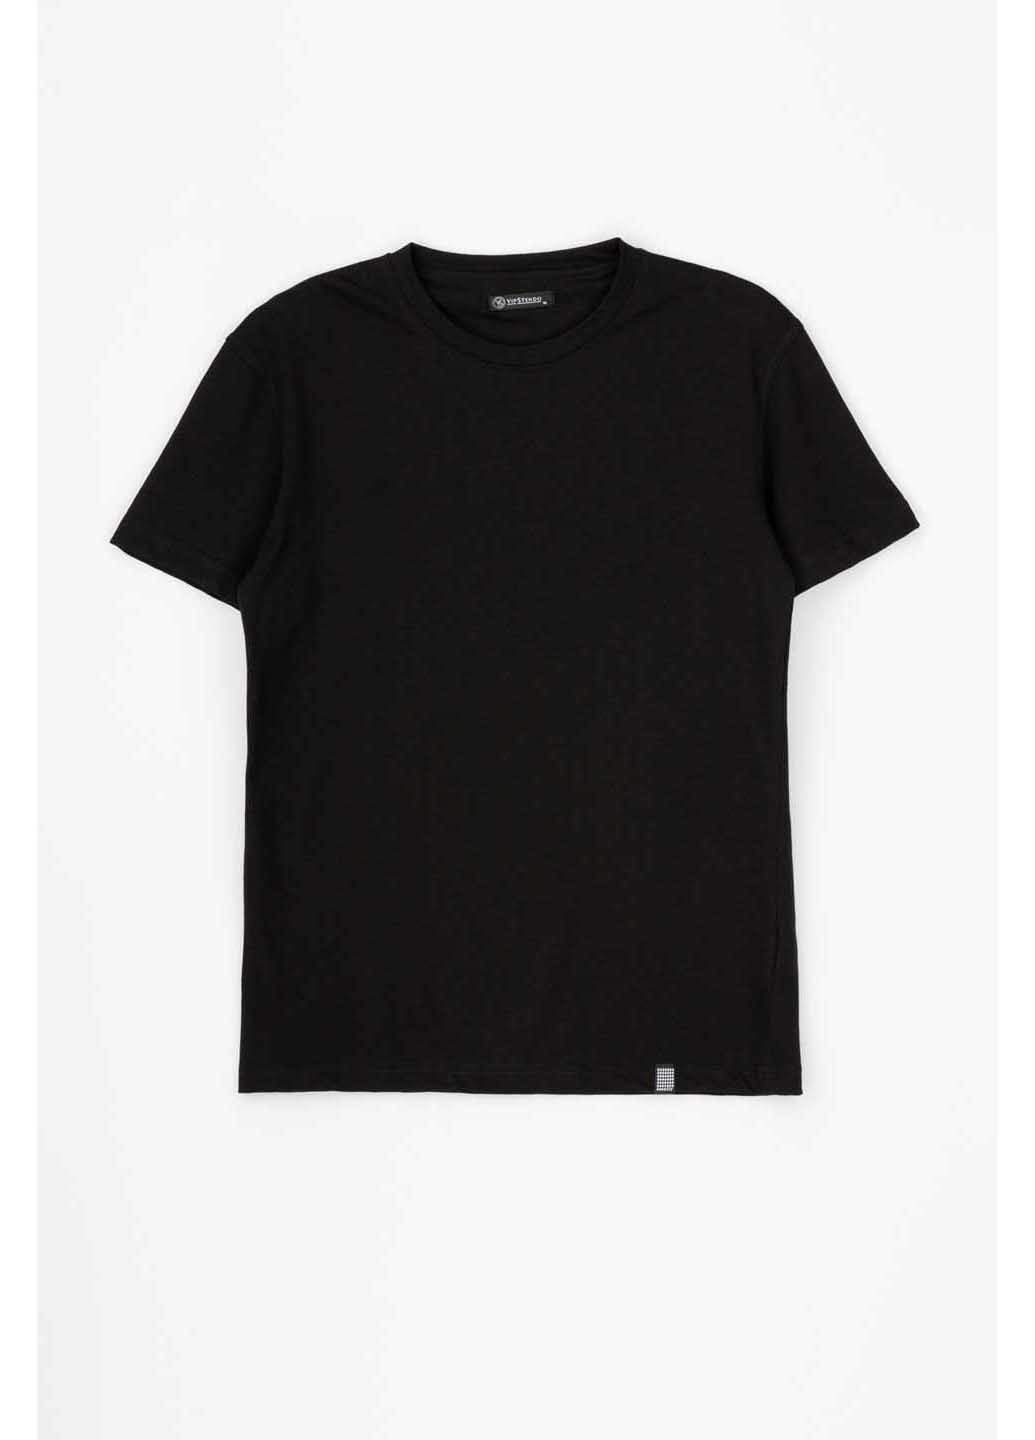 Черная футболка однотонная Stendo